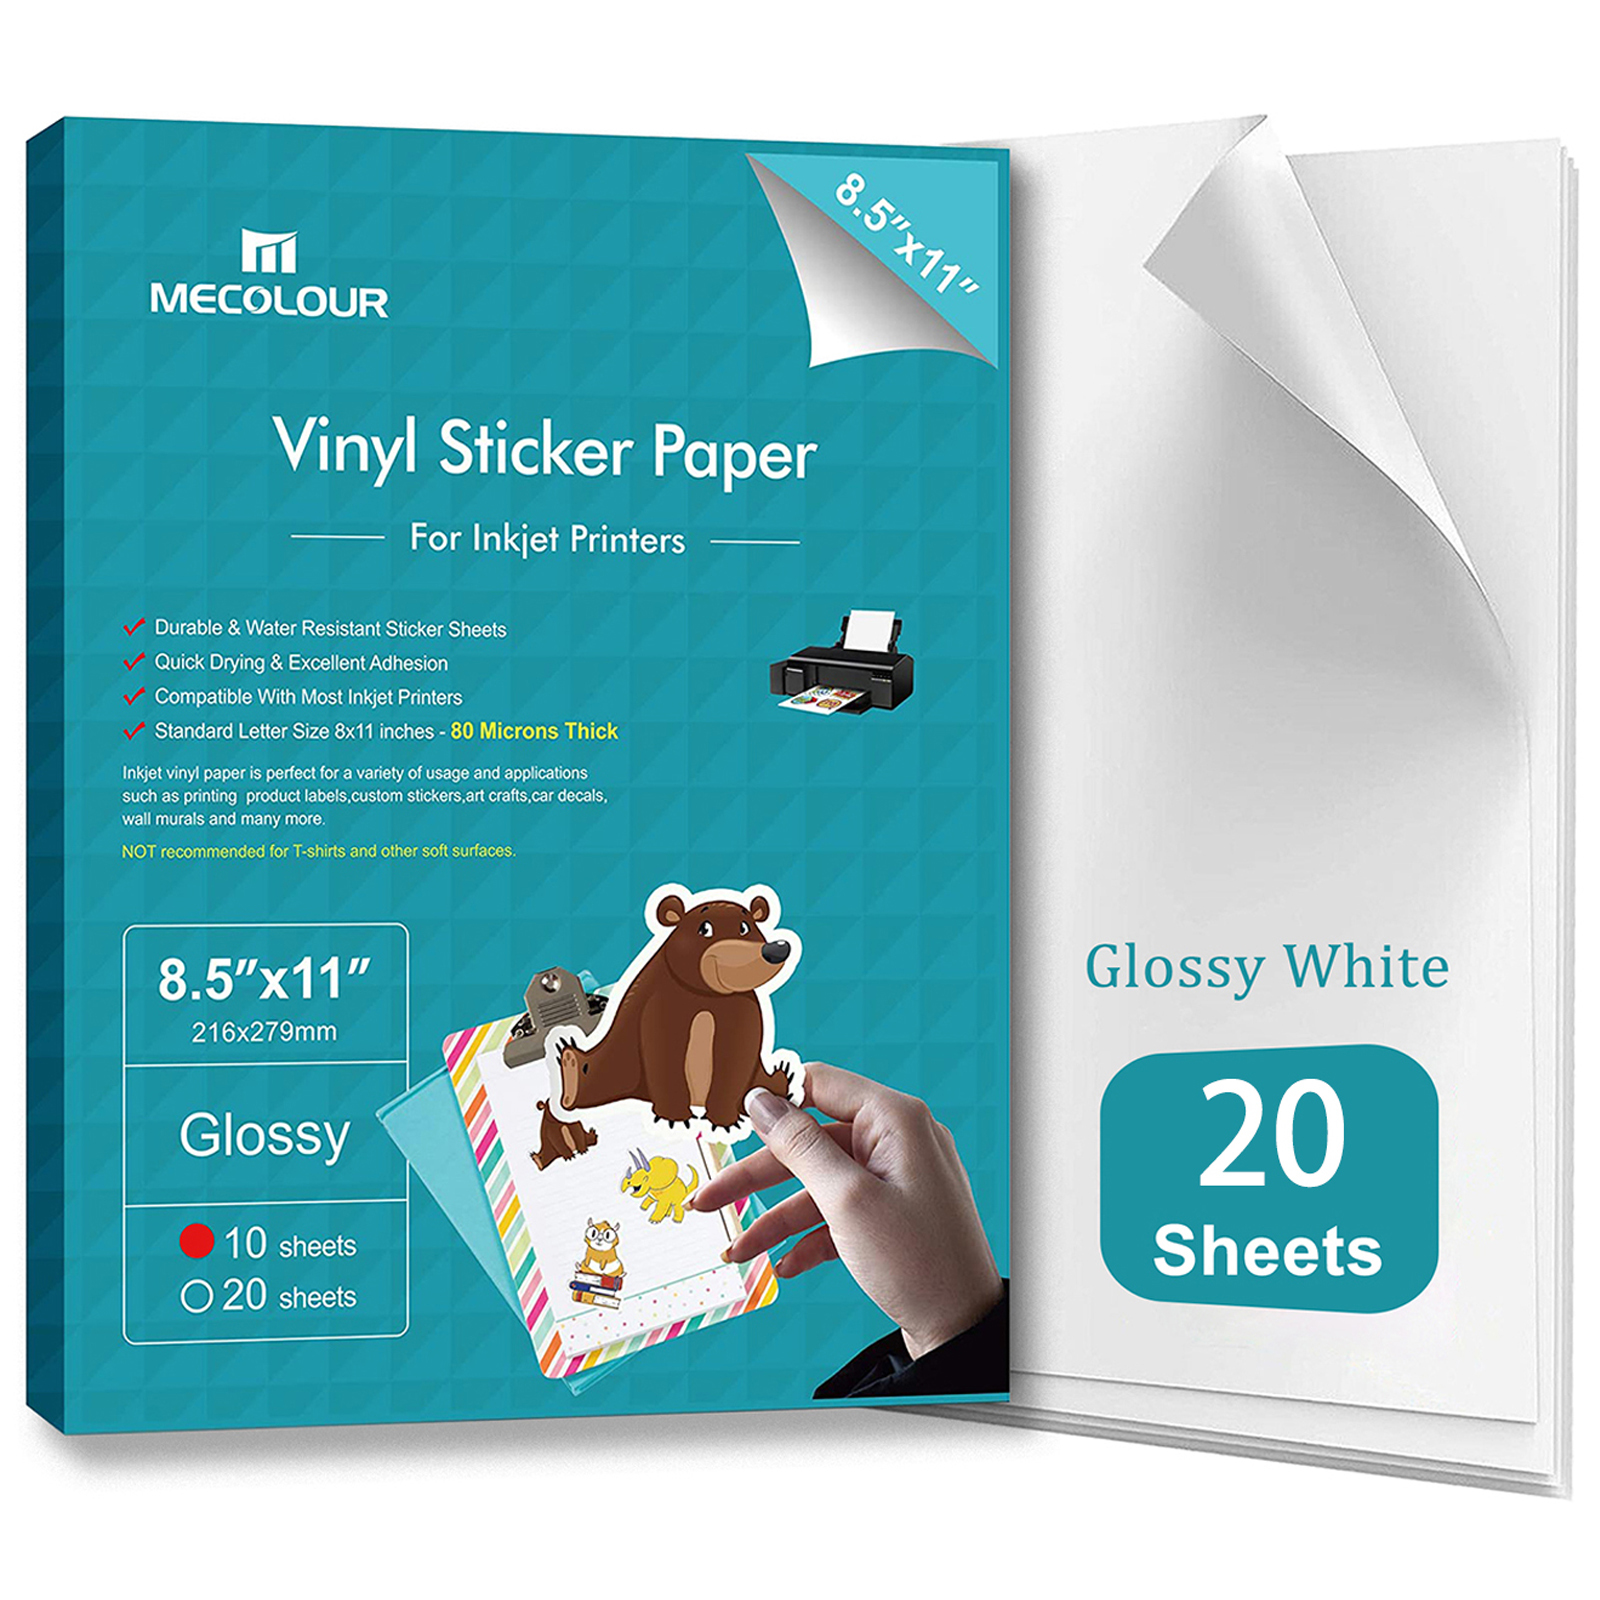 Printable Vinyl Sticker Paper for Inkjet Printer Glossy White 20X 8.5X11  Waterproof Decal Paper MECOLOUR 